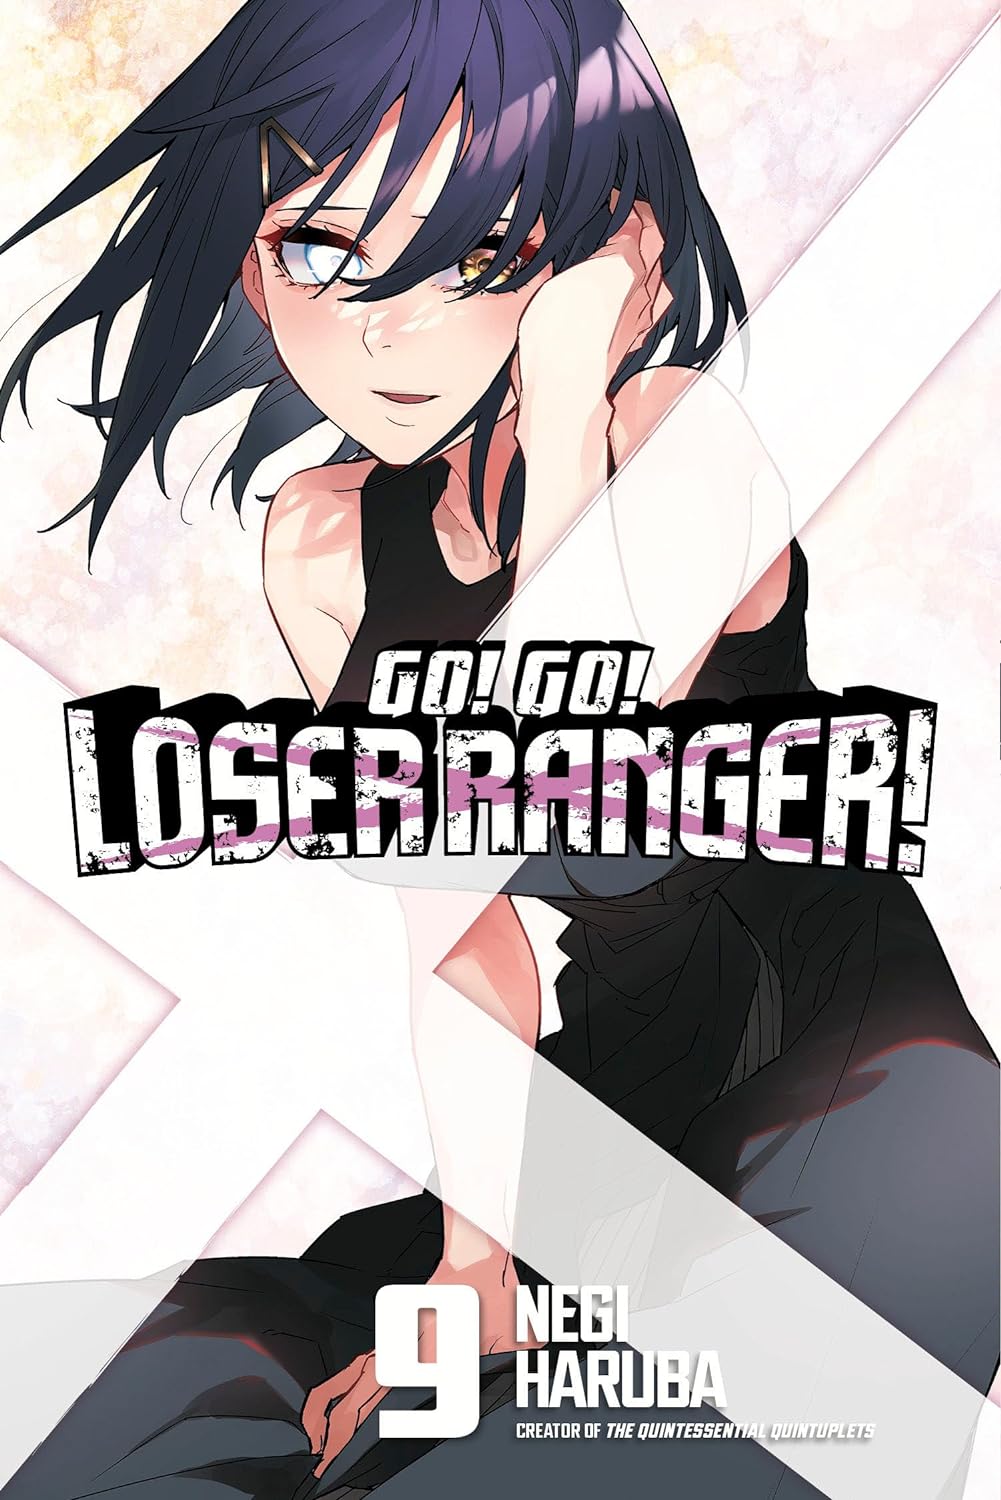 Go! Go! Loser Ranger! Vol. 09